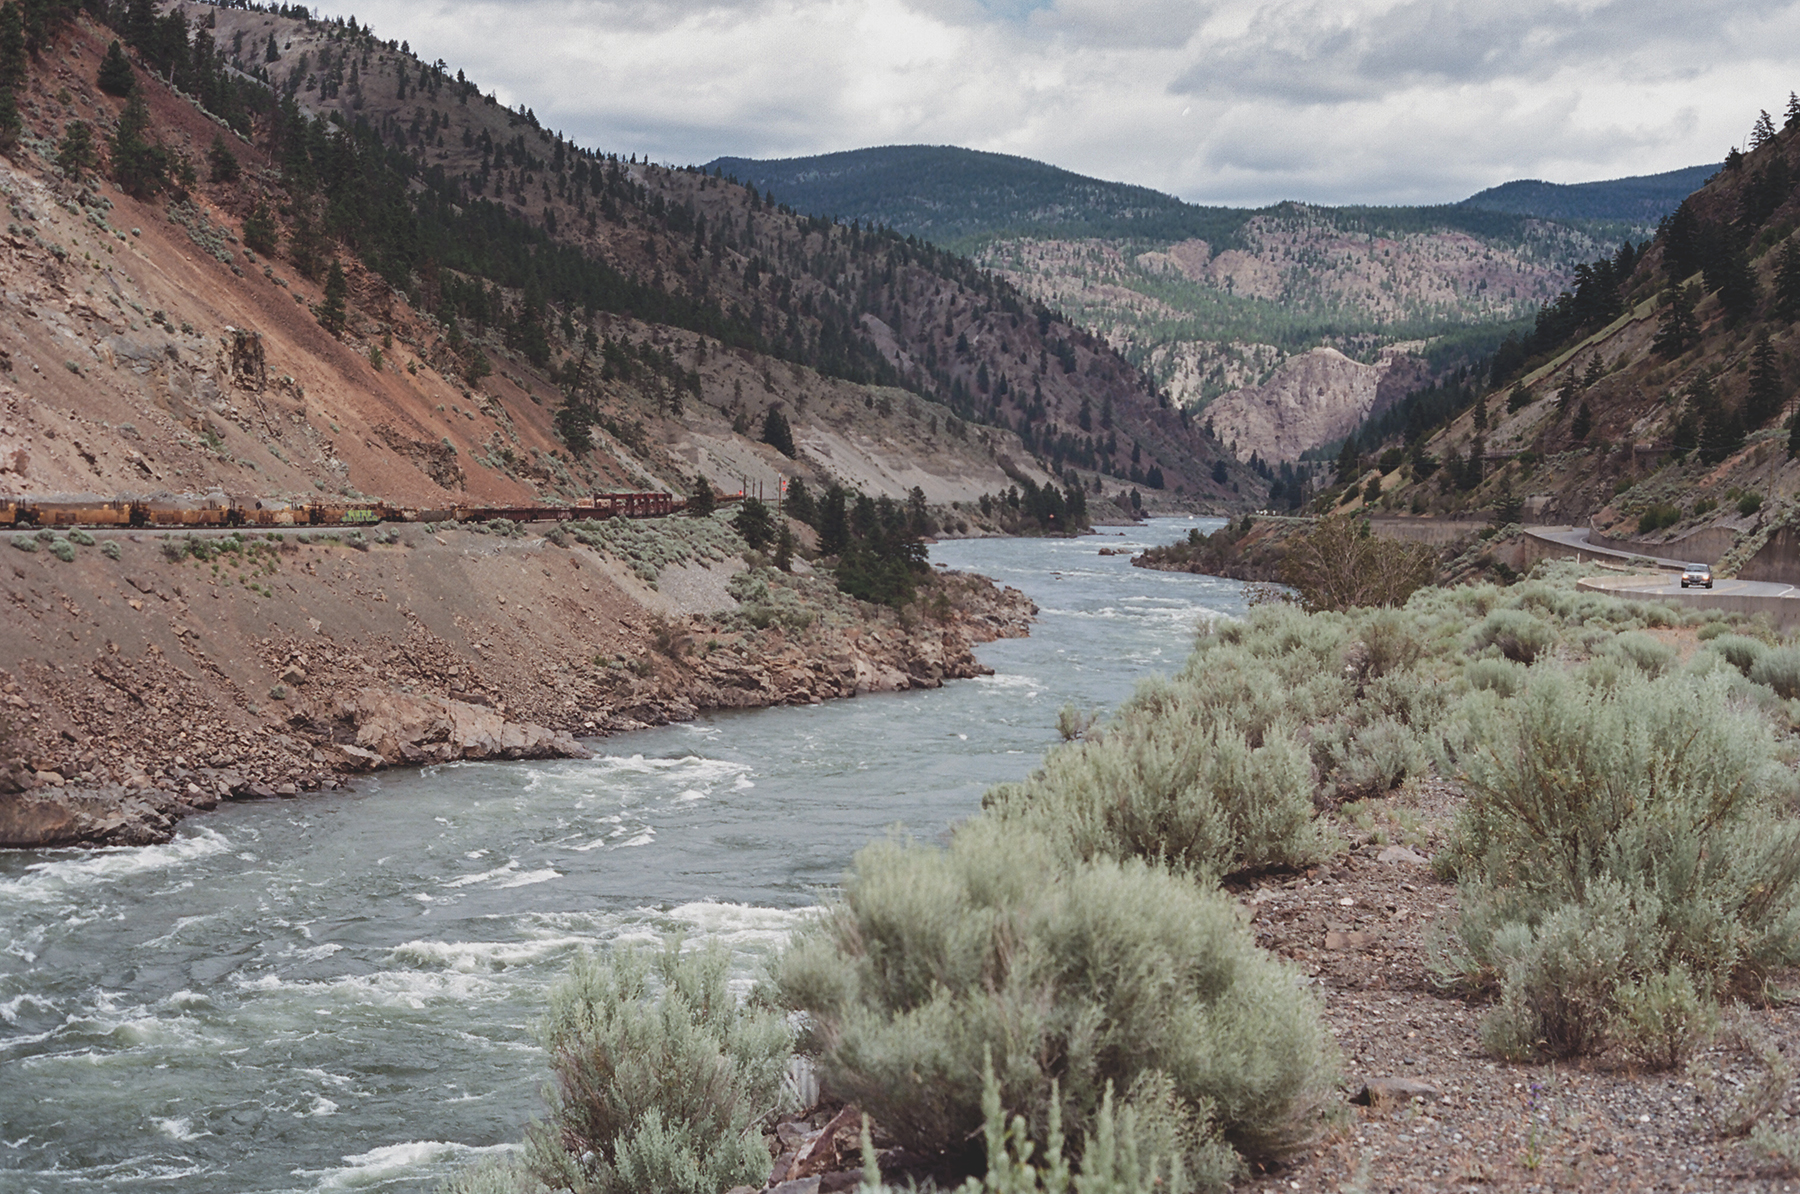   Untitled , Thompson River, BC, July 2016 -&nbsp;Canon AE-1,&nbsp;50mm F1.8 -&nbsp;Kodak Ecktar 100 Color Negative Film 